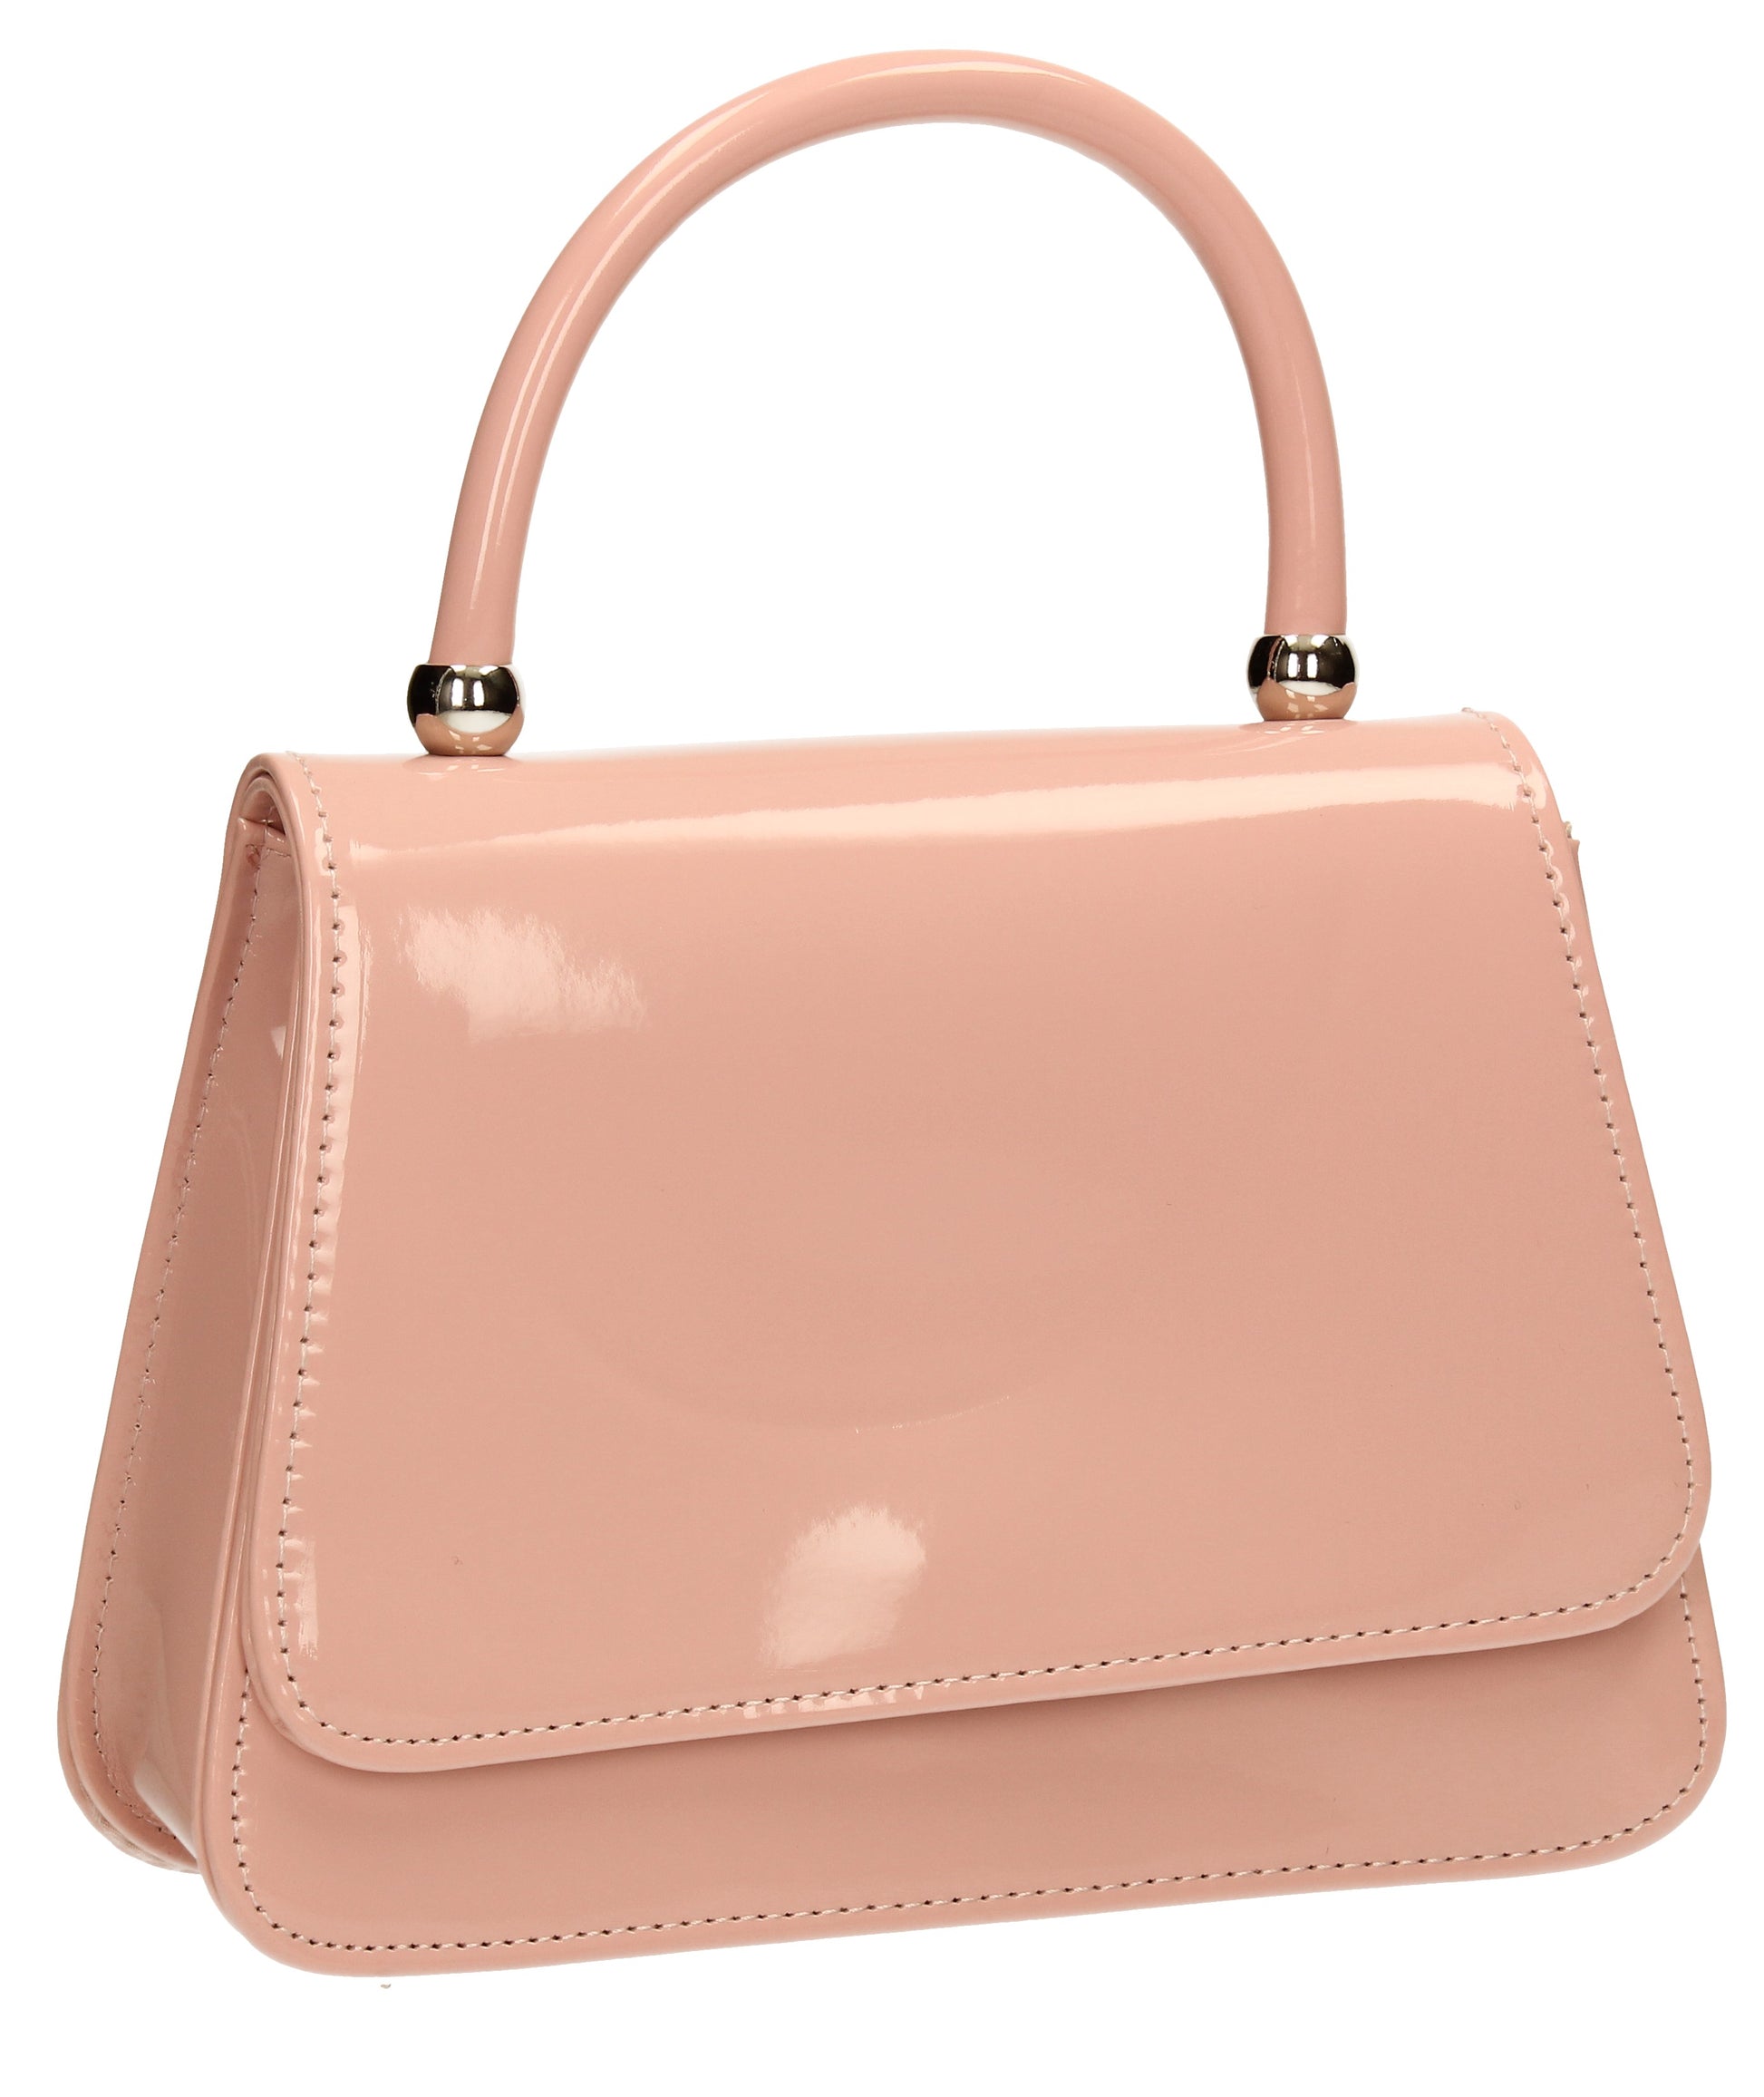 SWANKYSWANS Hayley Clutch Bag Pink Cute Cheap Clutch Bag For Weddings School and Work